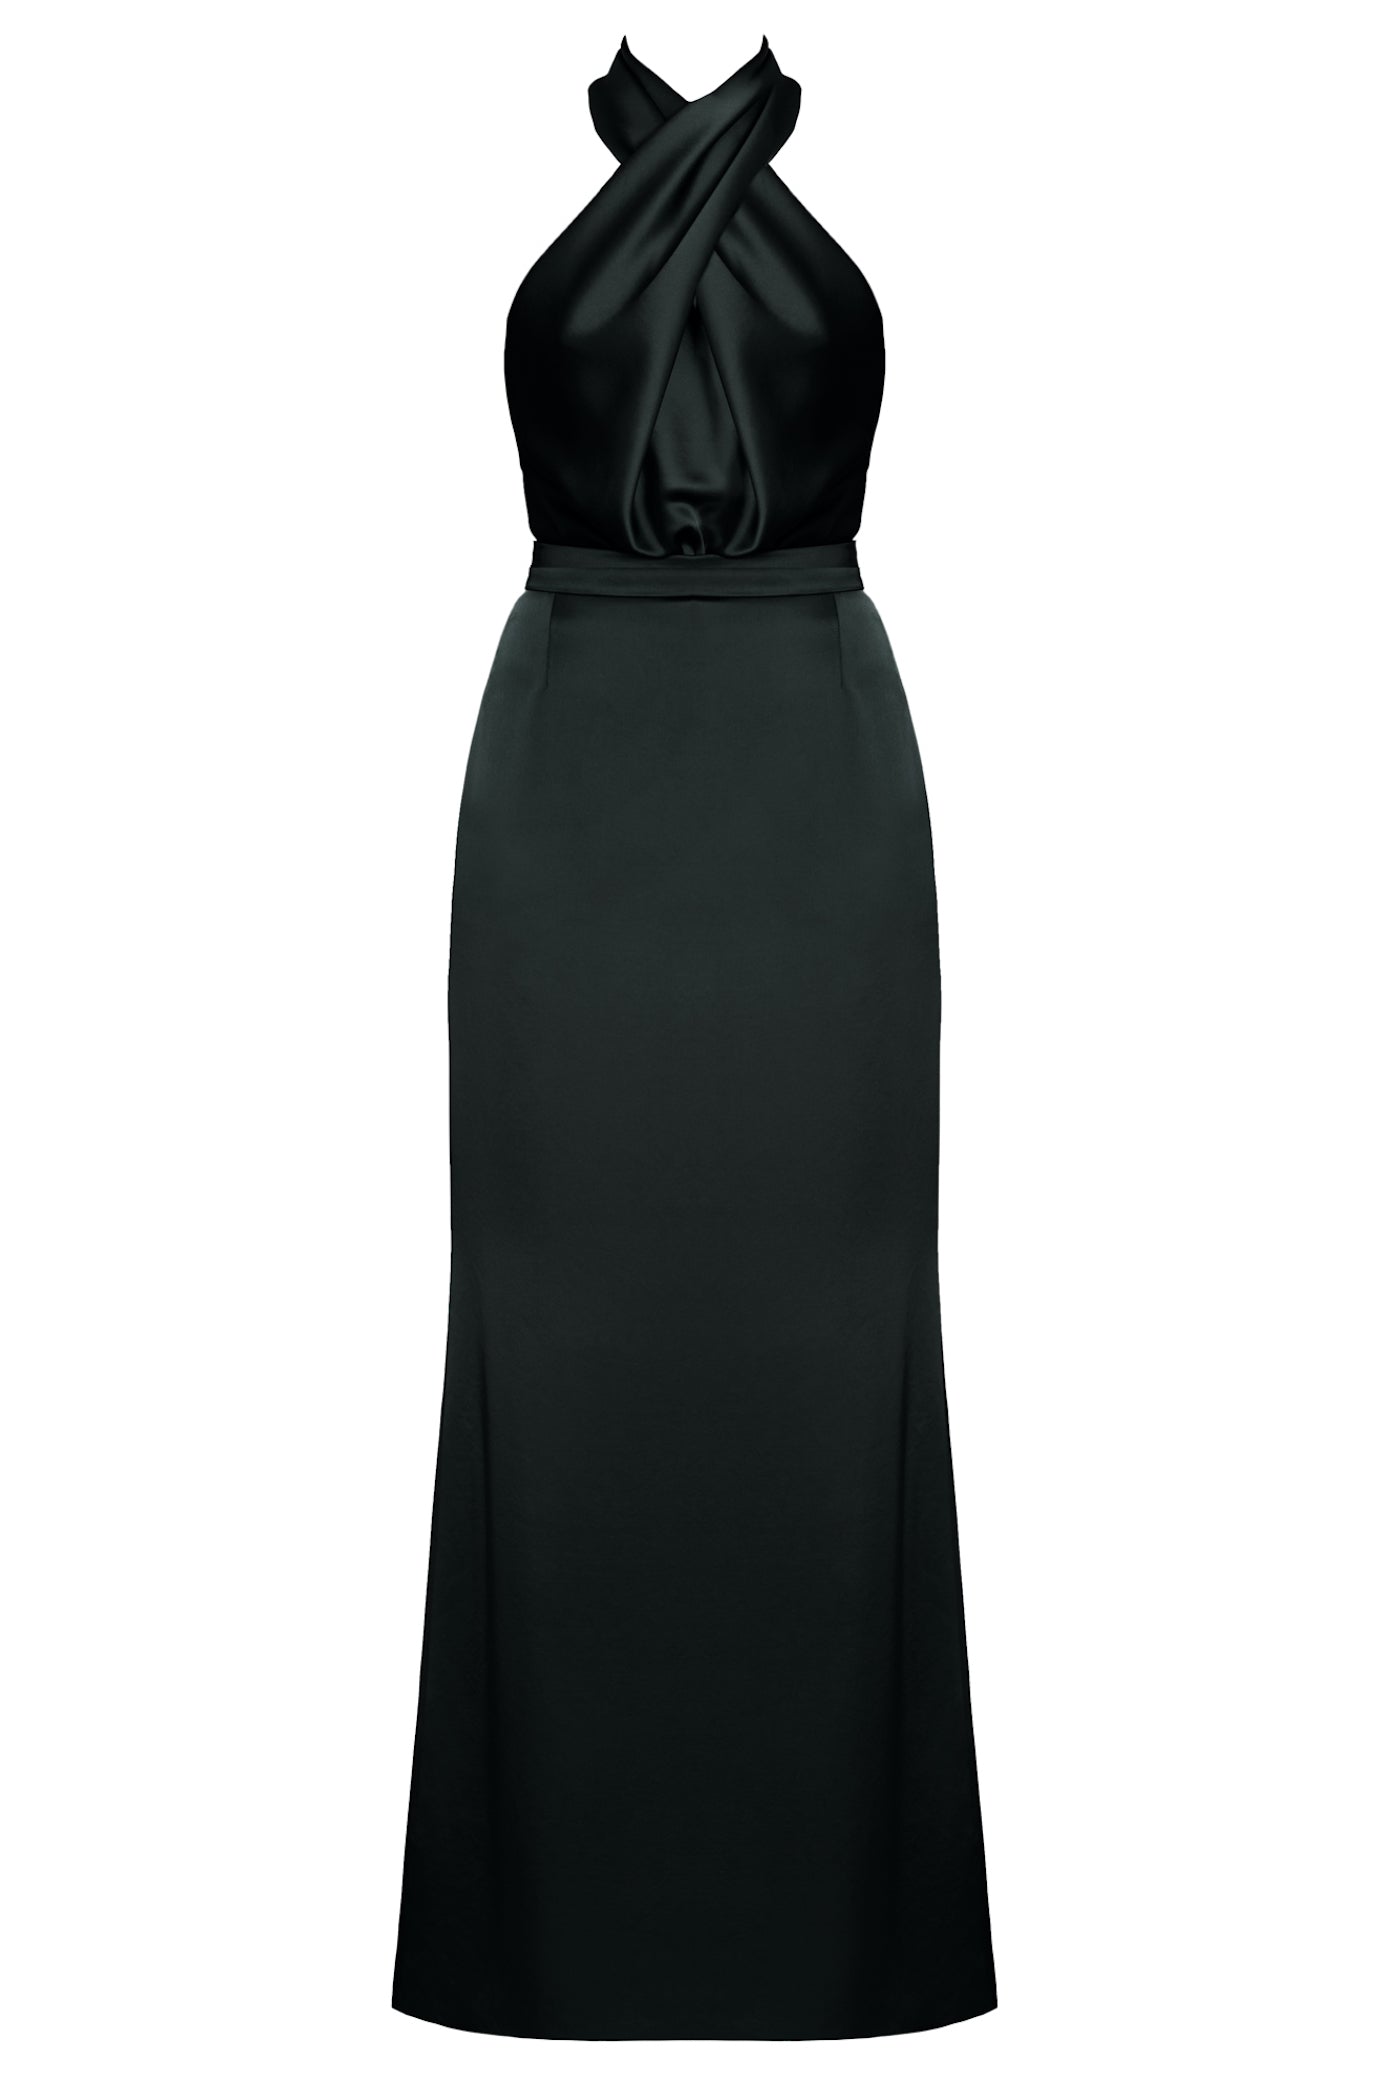 Women's Black Evening Gown